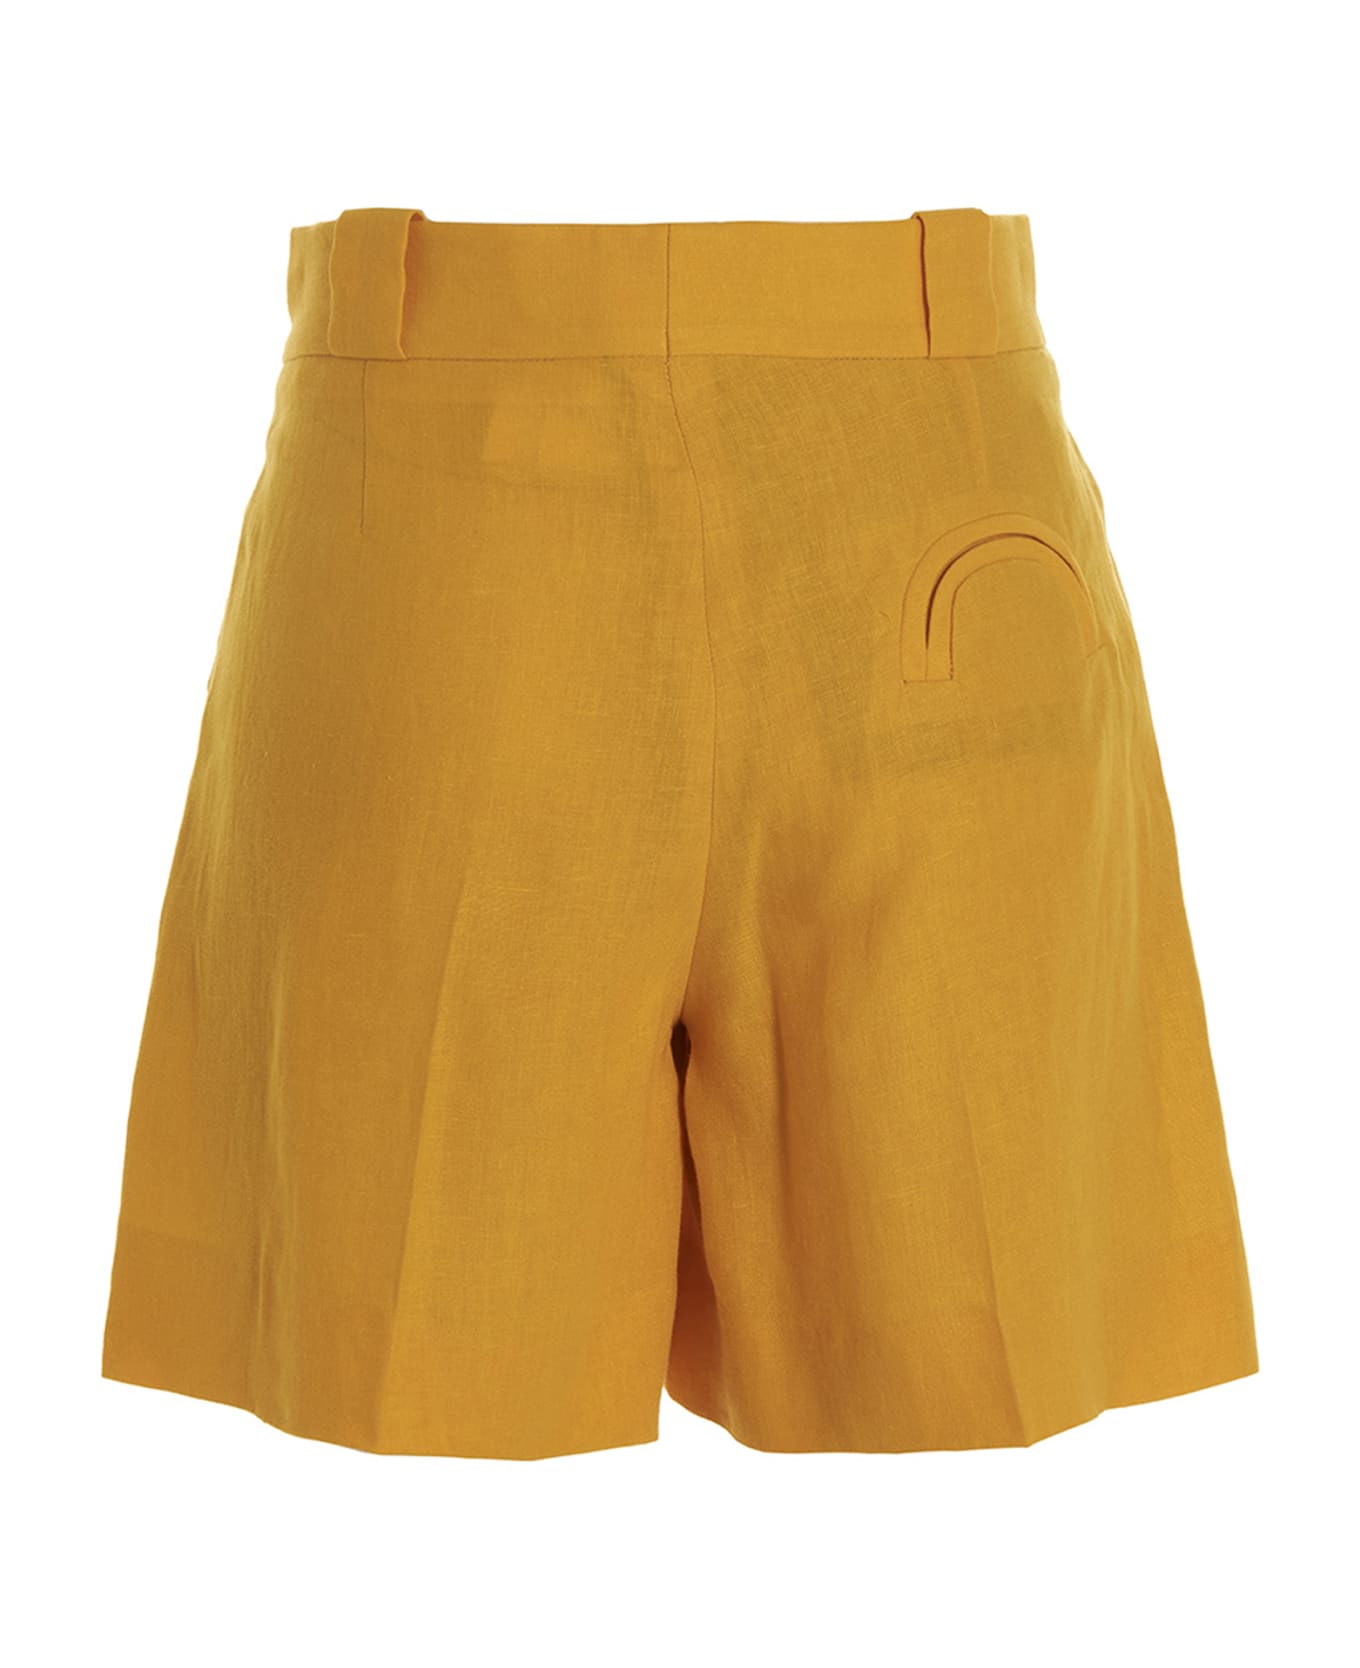 Blazé Milano 'midday Sun Clementine Husul' Bermuda Shorts - Yellow